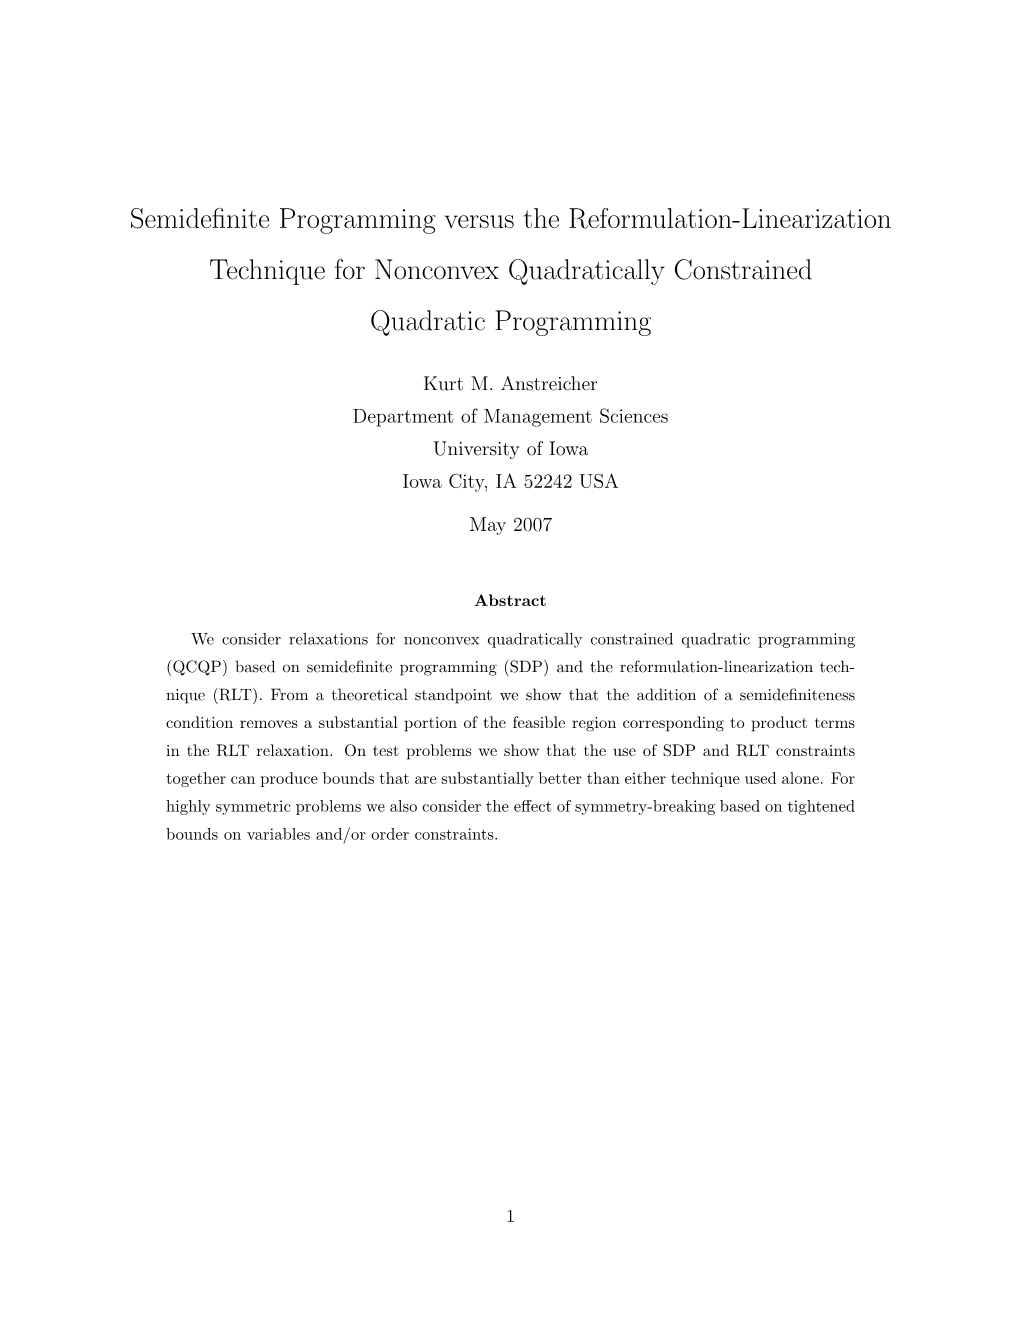 Semidefinite Programming Versus the Reformulation-Linearization